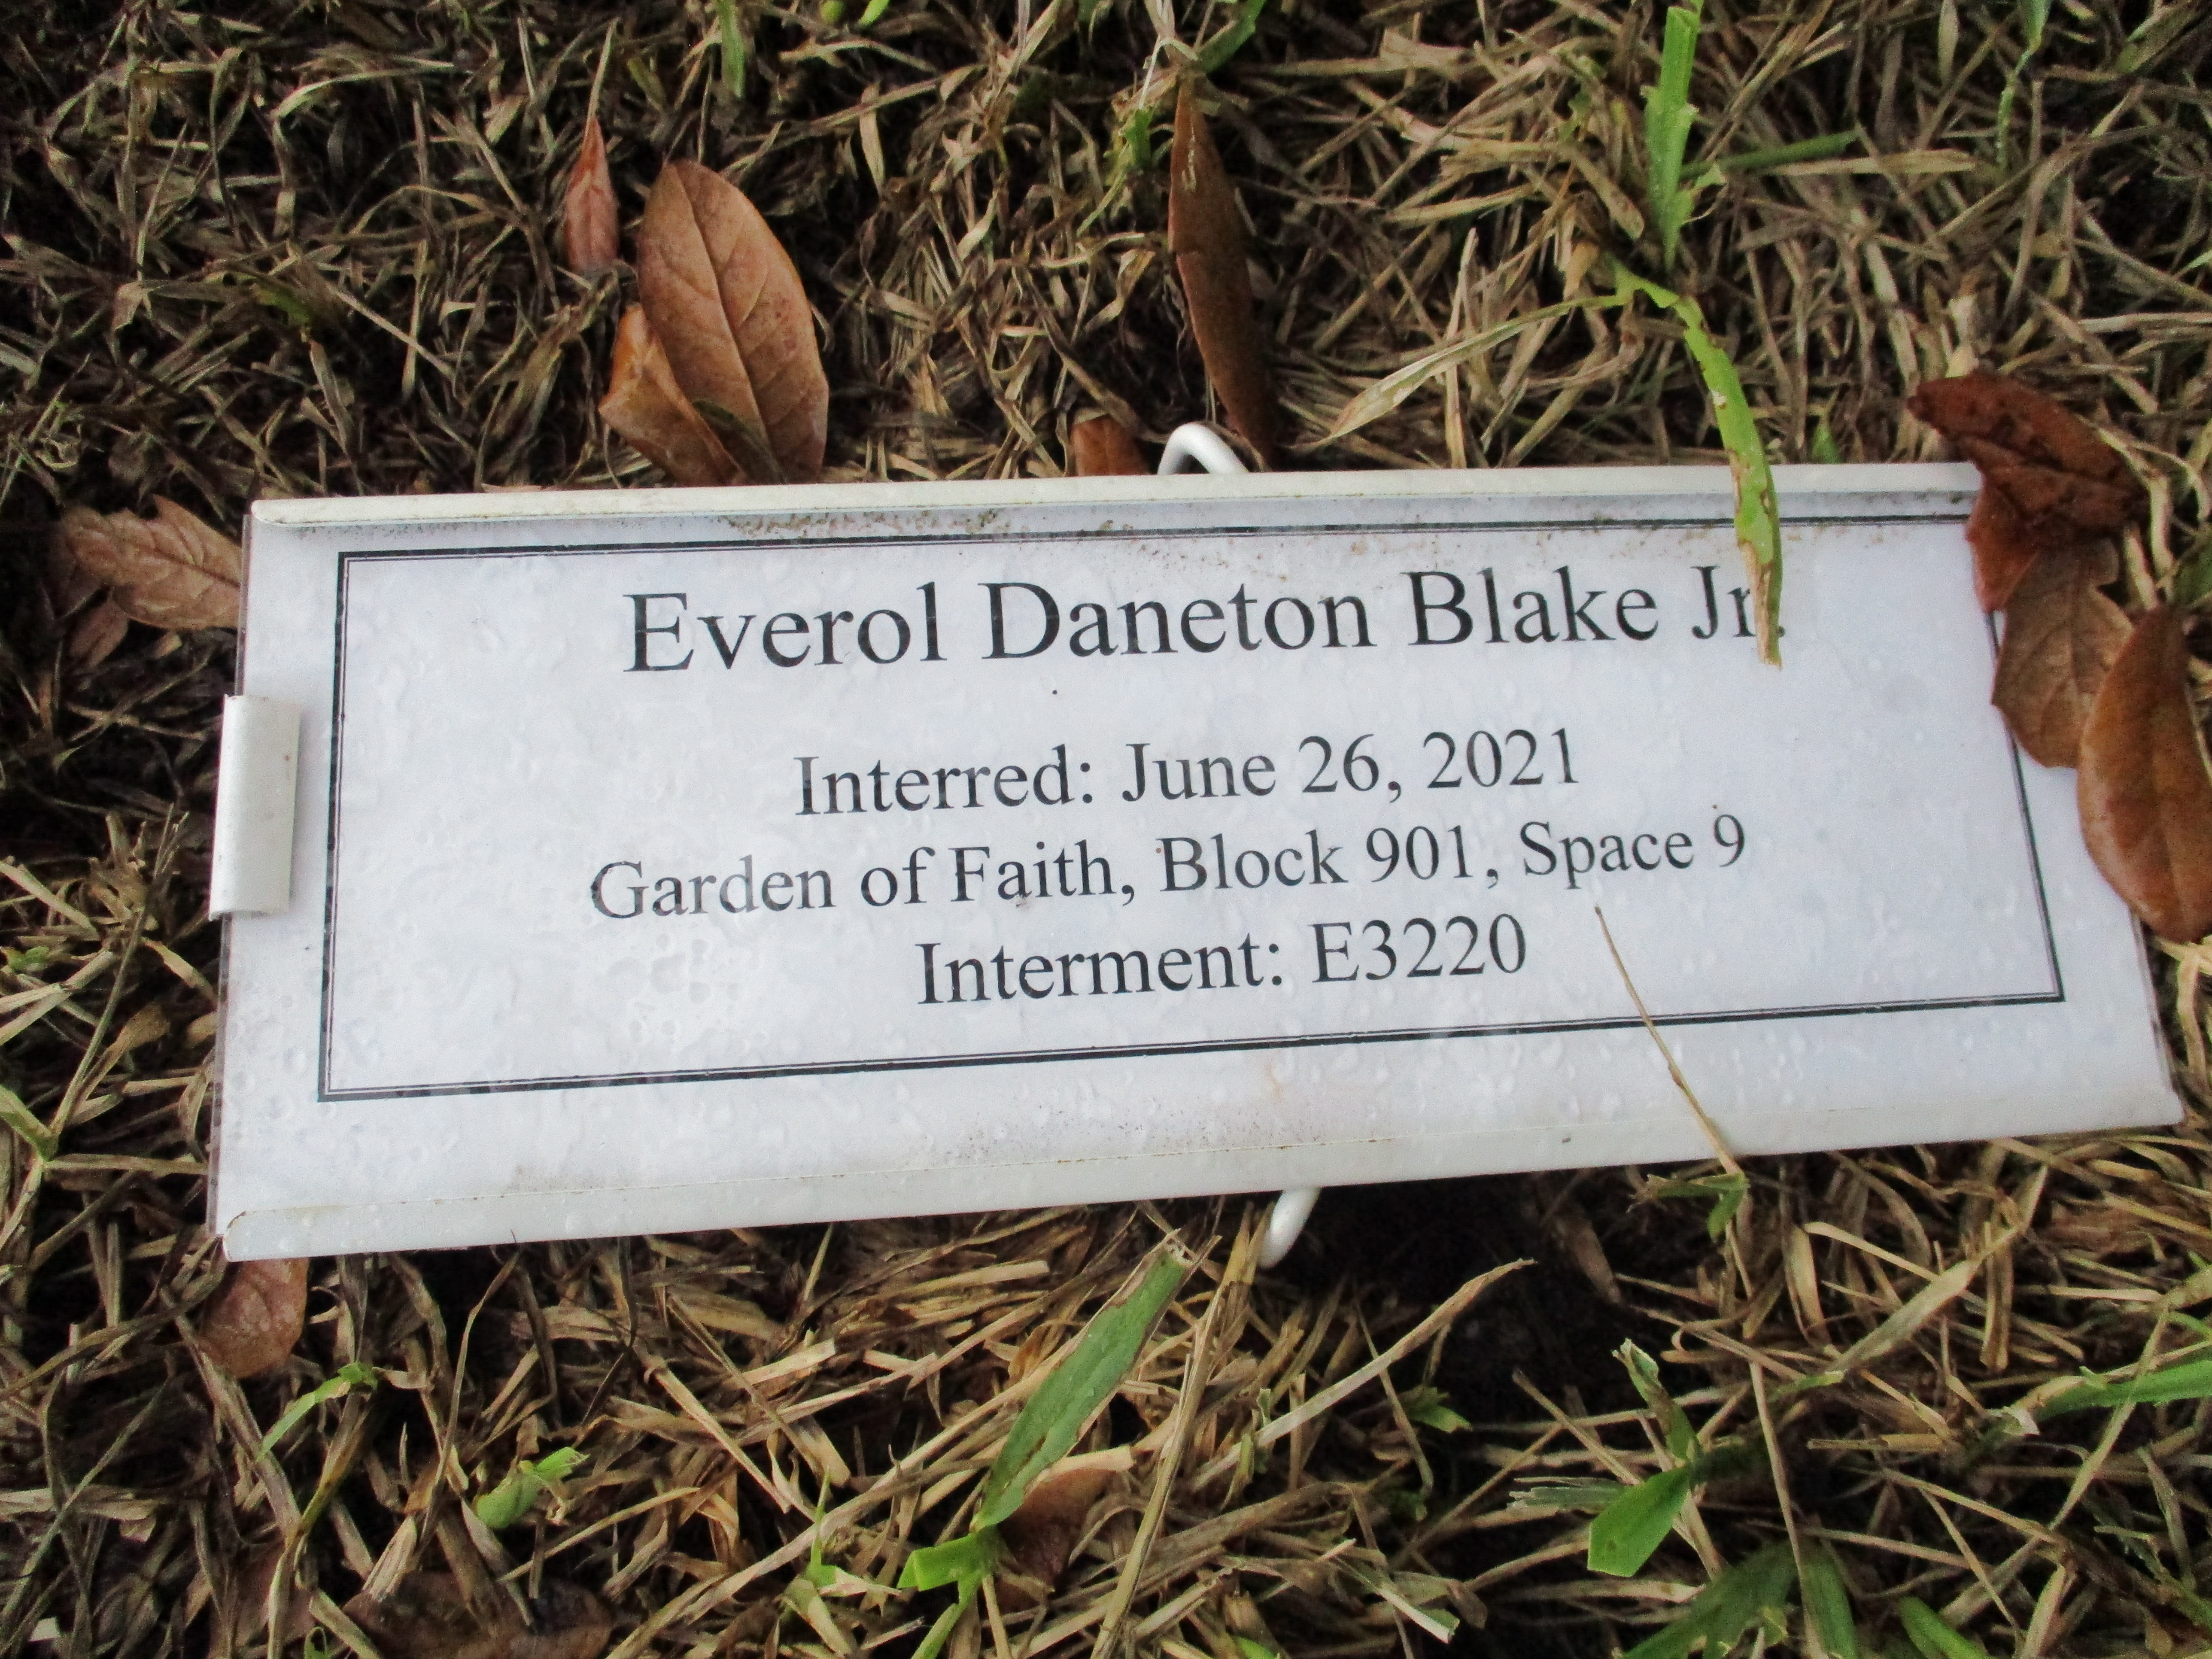 Everol Daneton Blake, Jr